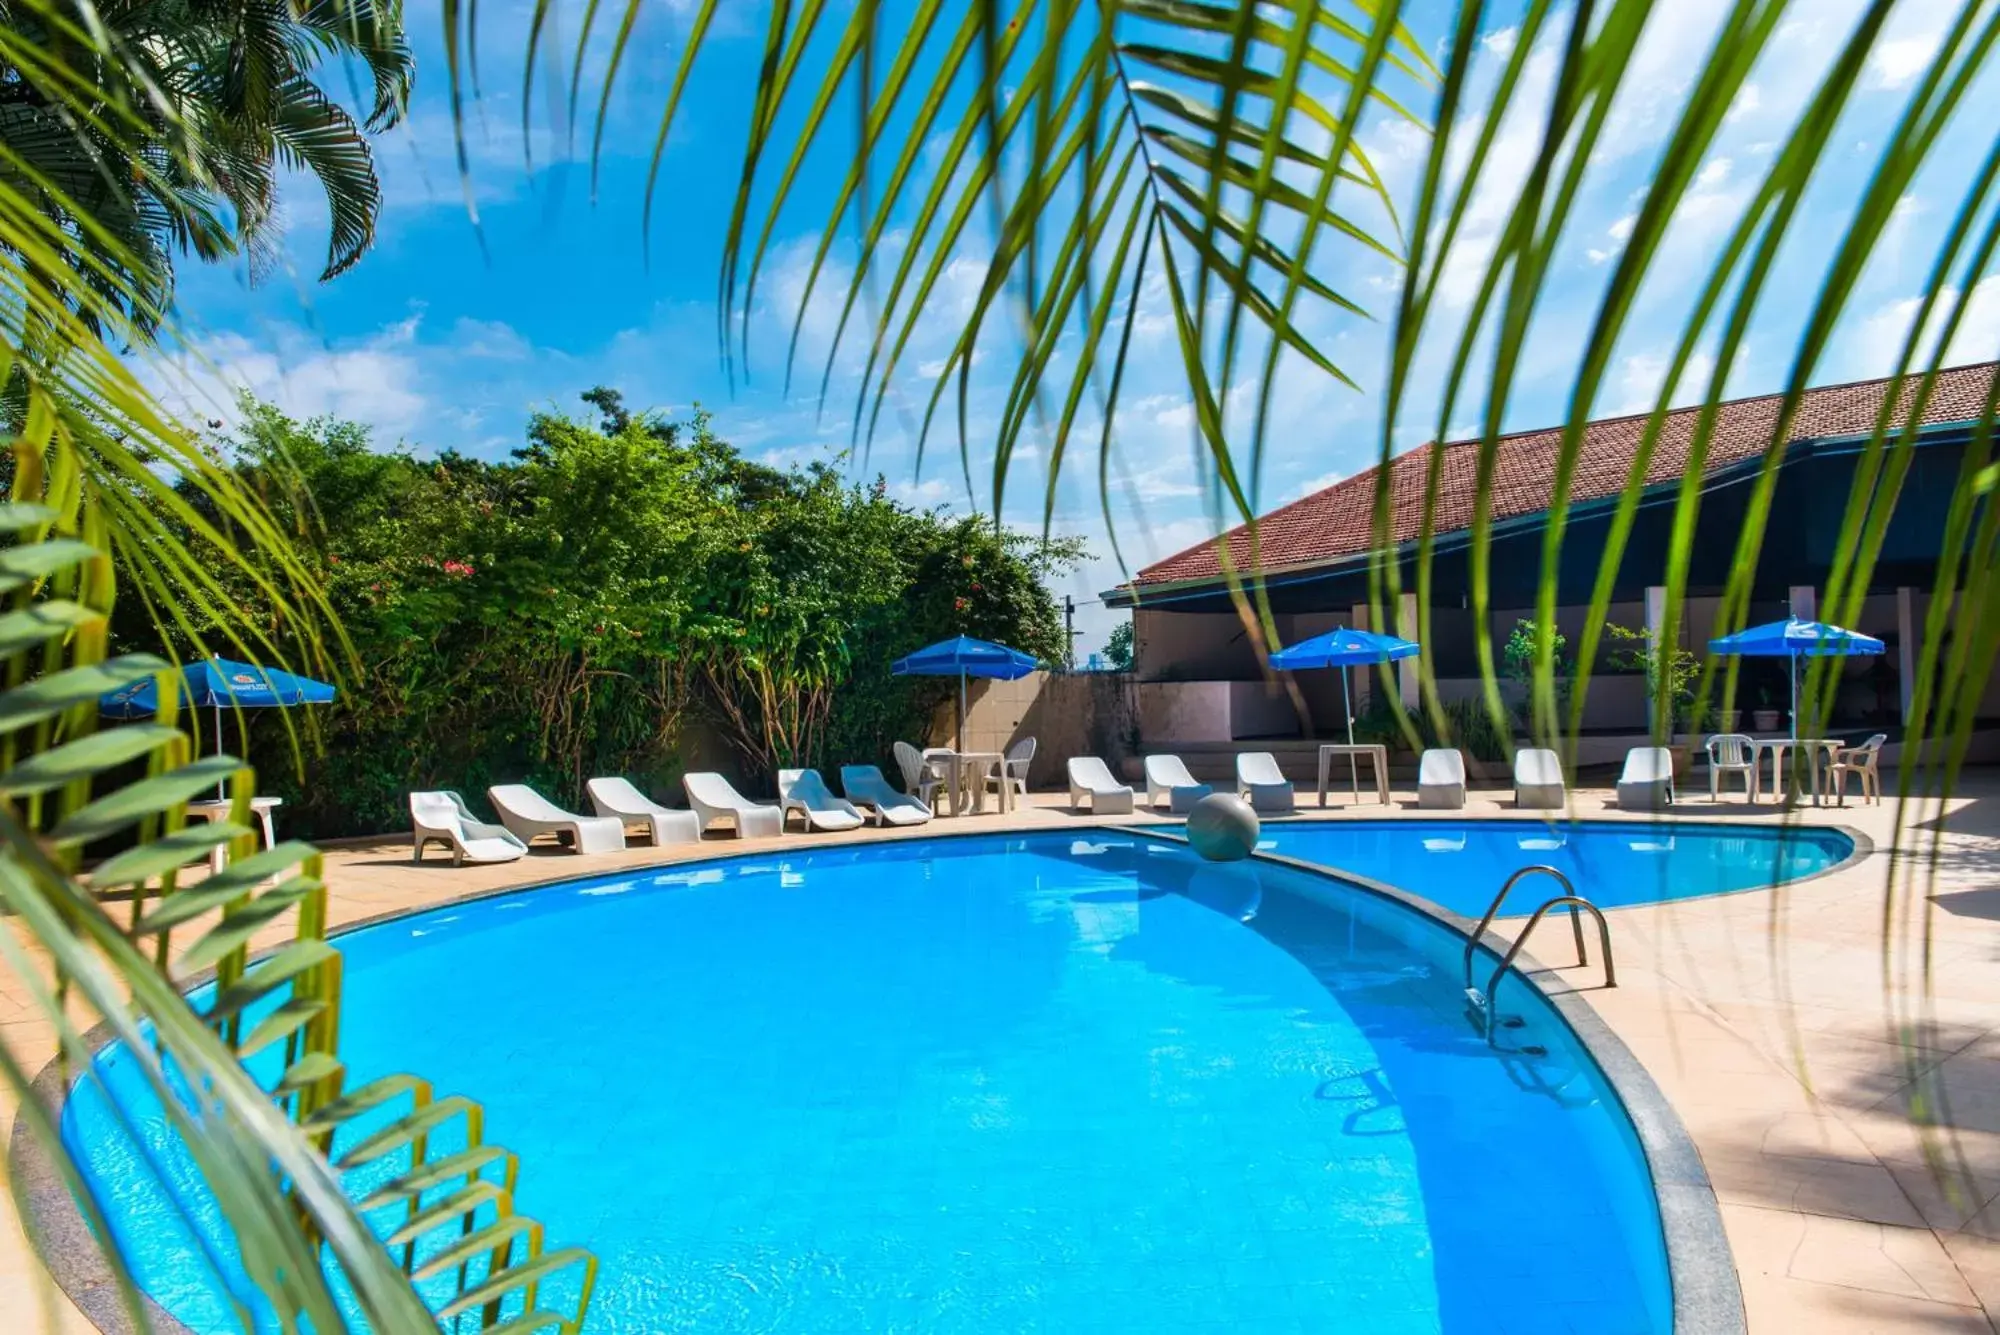 Swimming Pool in Manacá Hotel